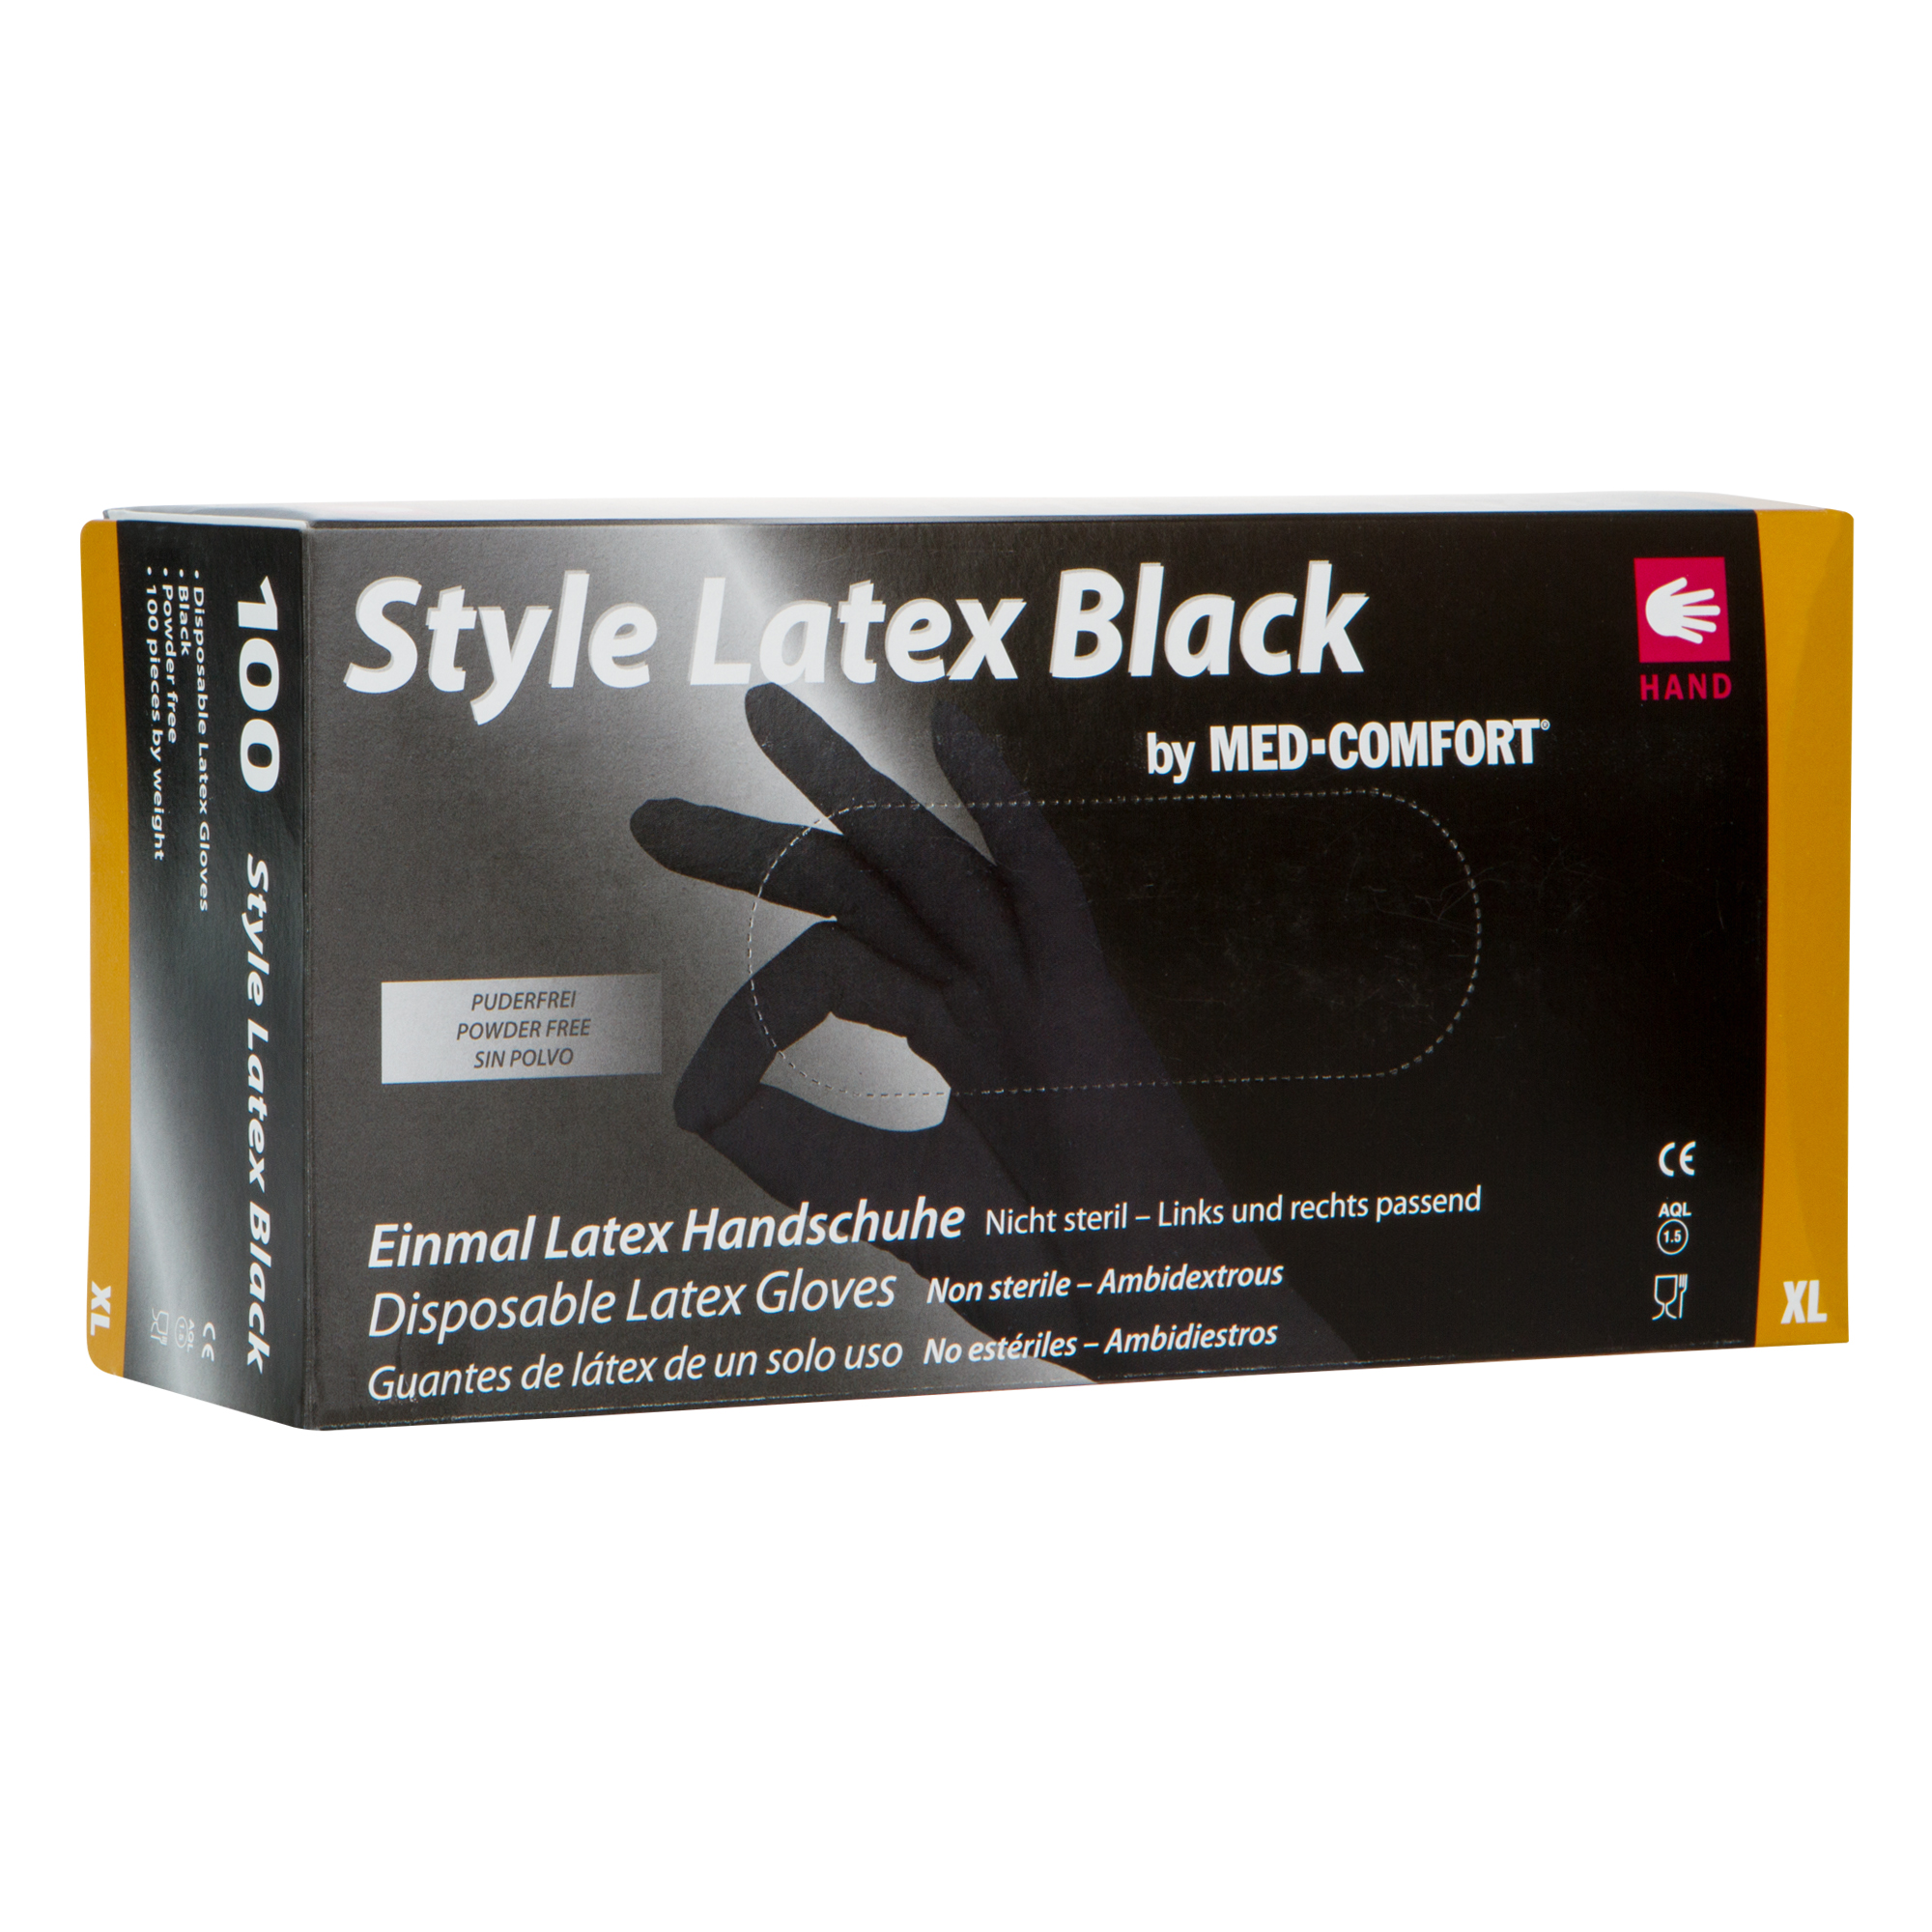 Style Latex Black Einmalhandschuhe puderfrei